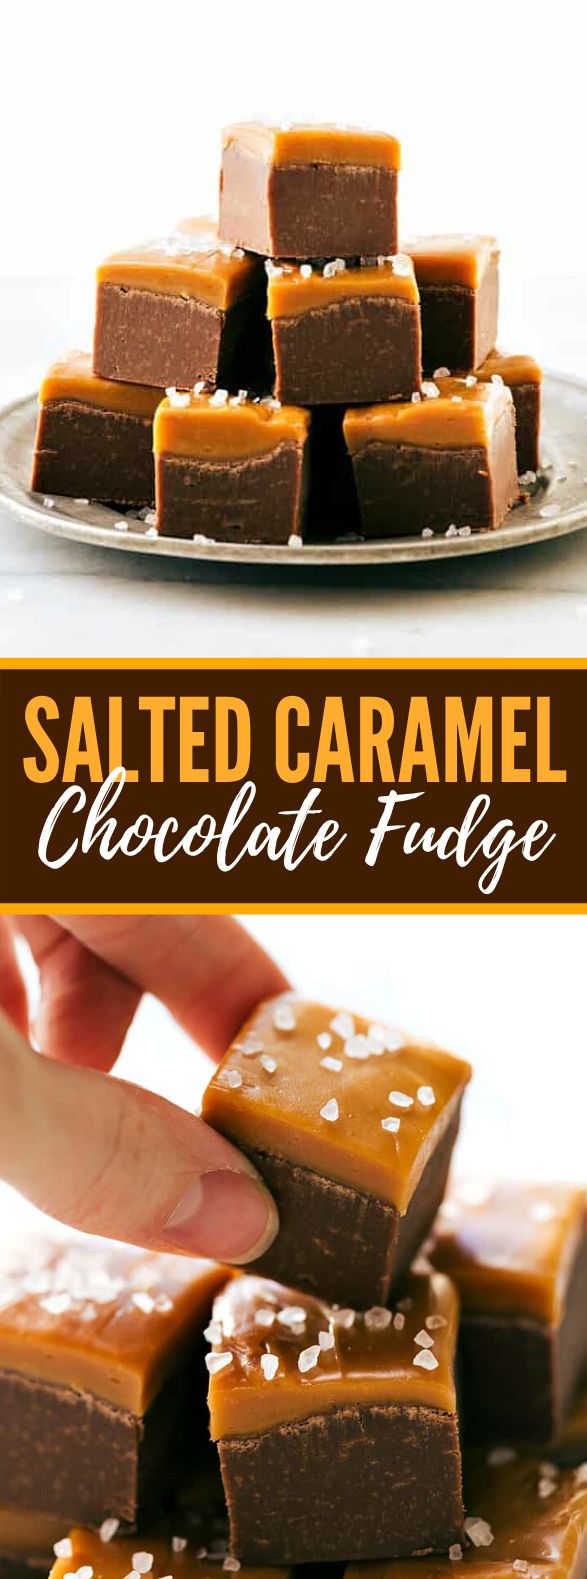 CHOCOLATE CARAMEL FUDGE #desserts #candy